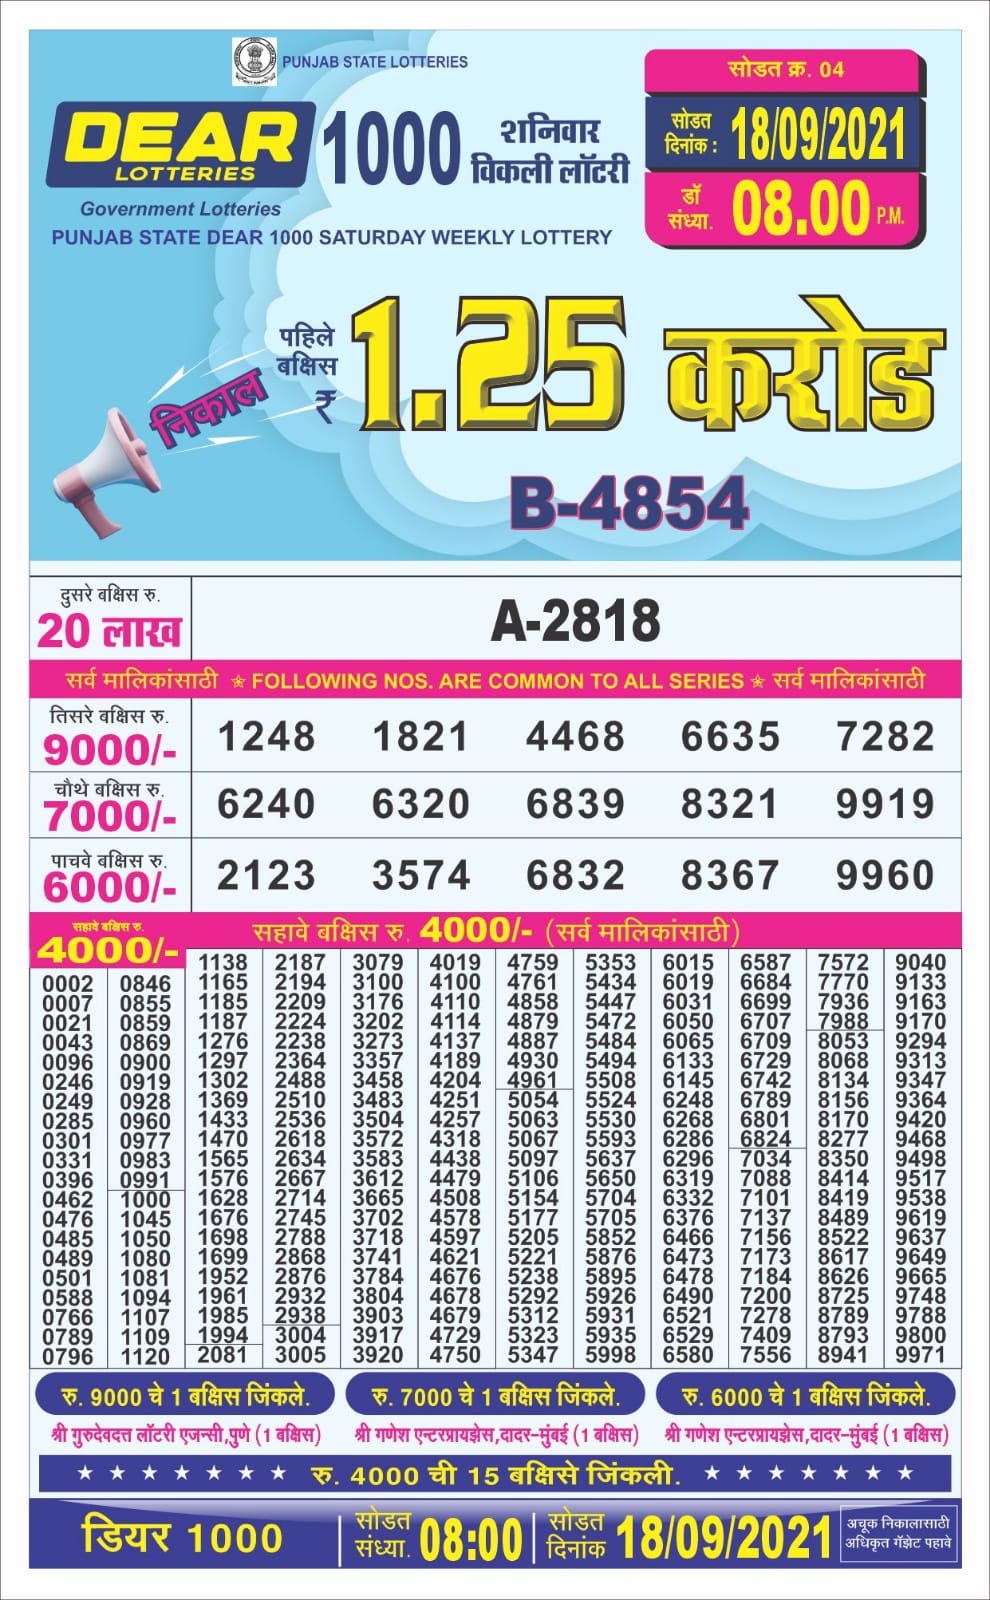 Dear 1000 Weekly lottery result 18-09-2021